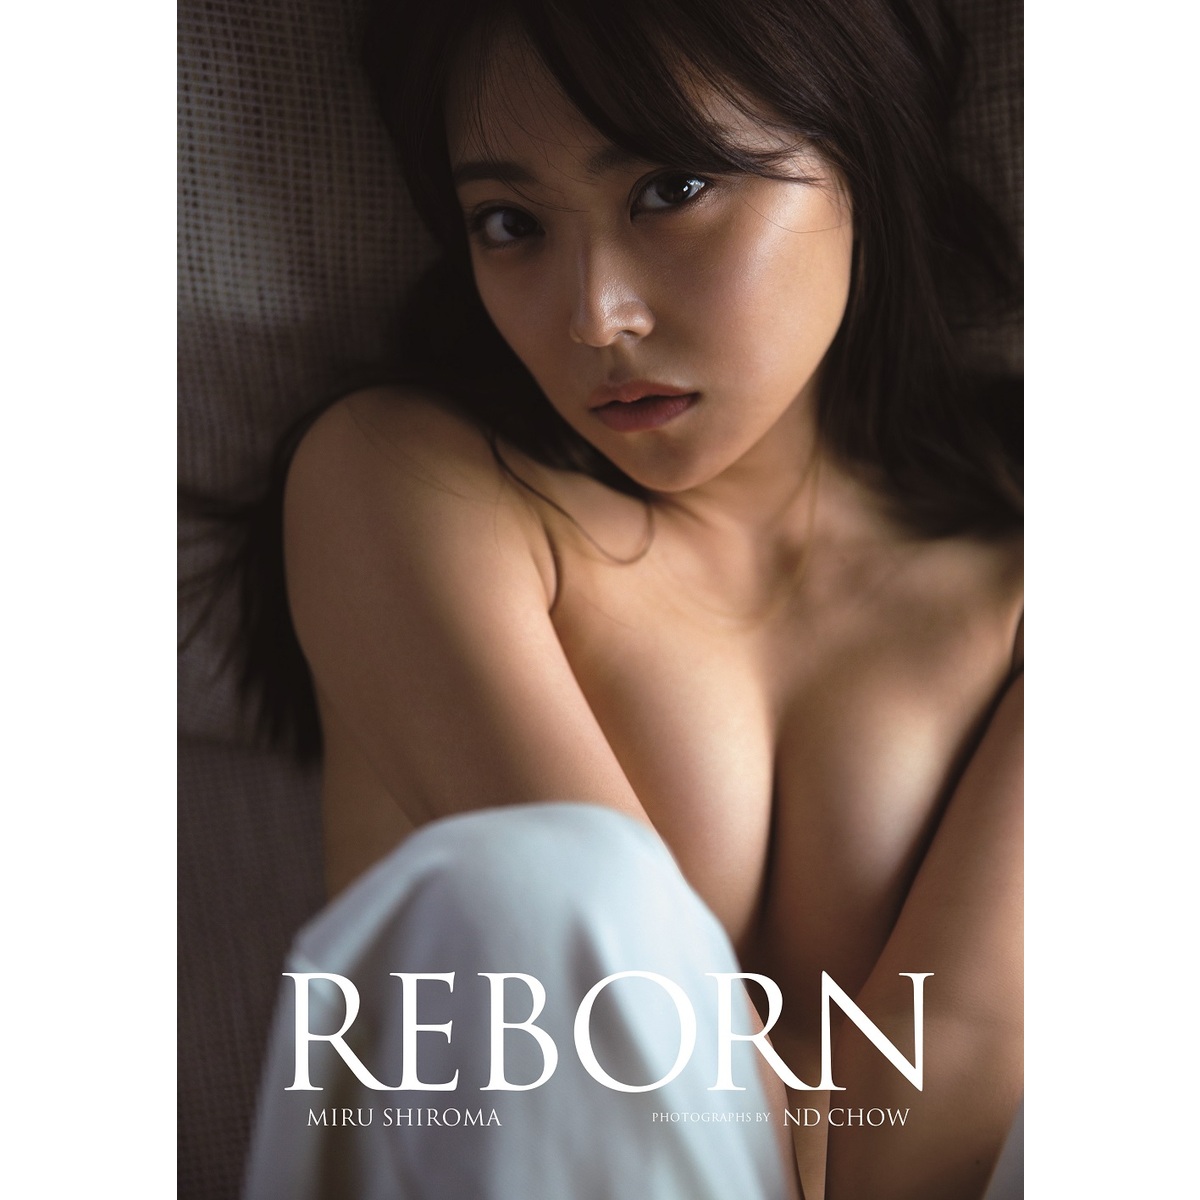 Amazon.co.jp: 白間美瑠 NMB48卒業記念写真集 『 REBORN 』 (ヨシモトブックス) : ND CHOW: 本 - 女性タレント